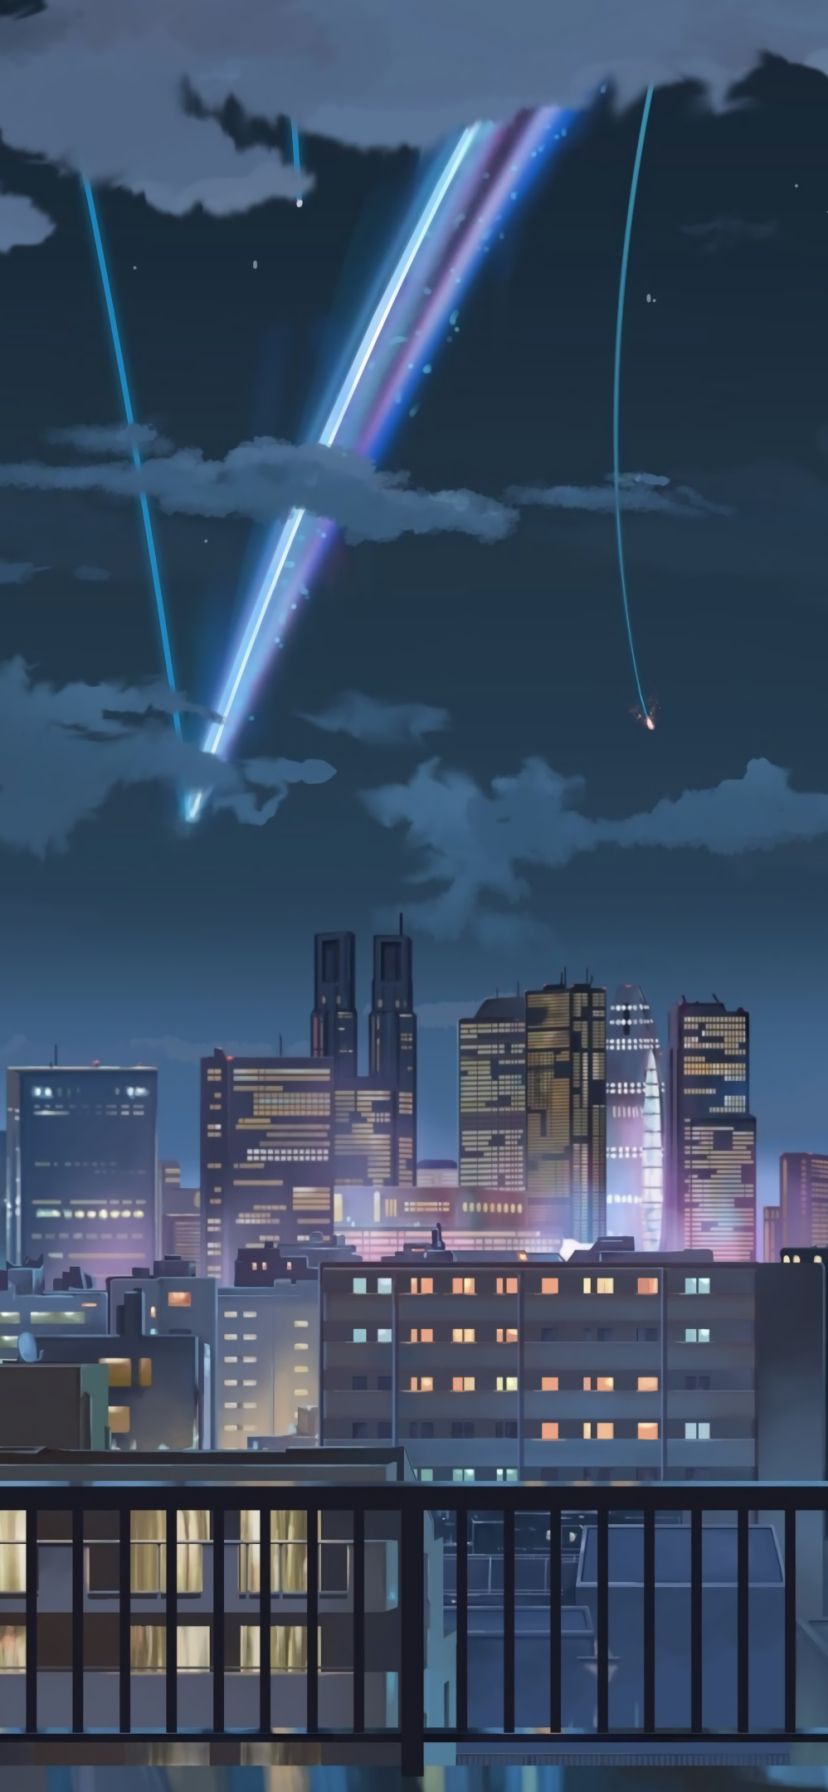 Blue Comet SPT Layzner - The 1985 anime series